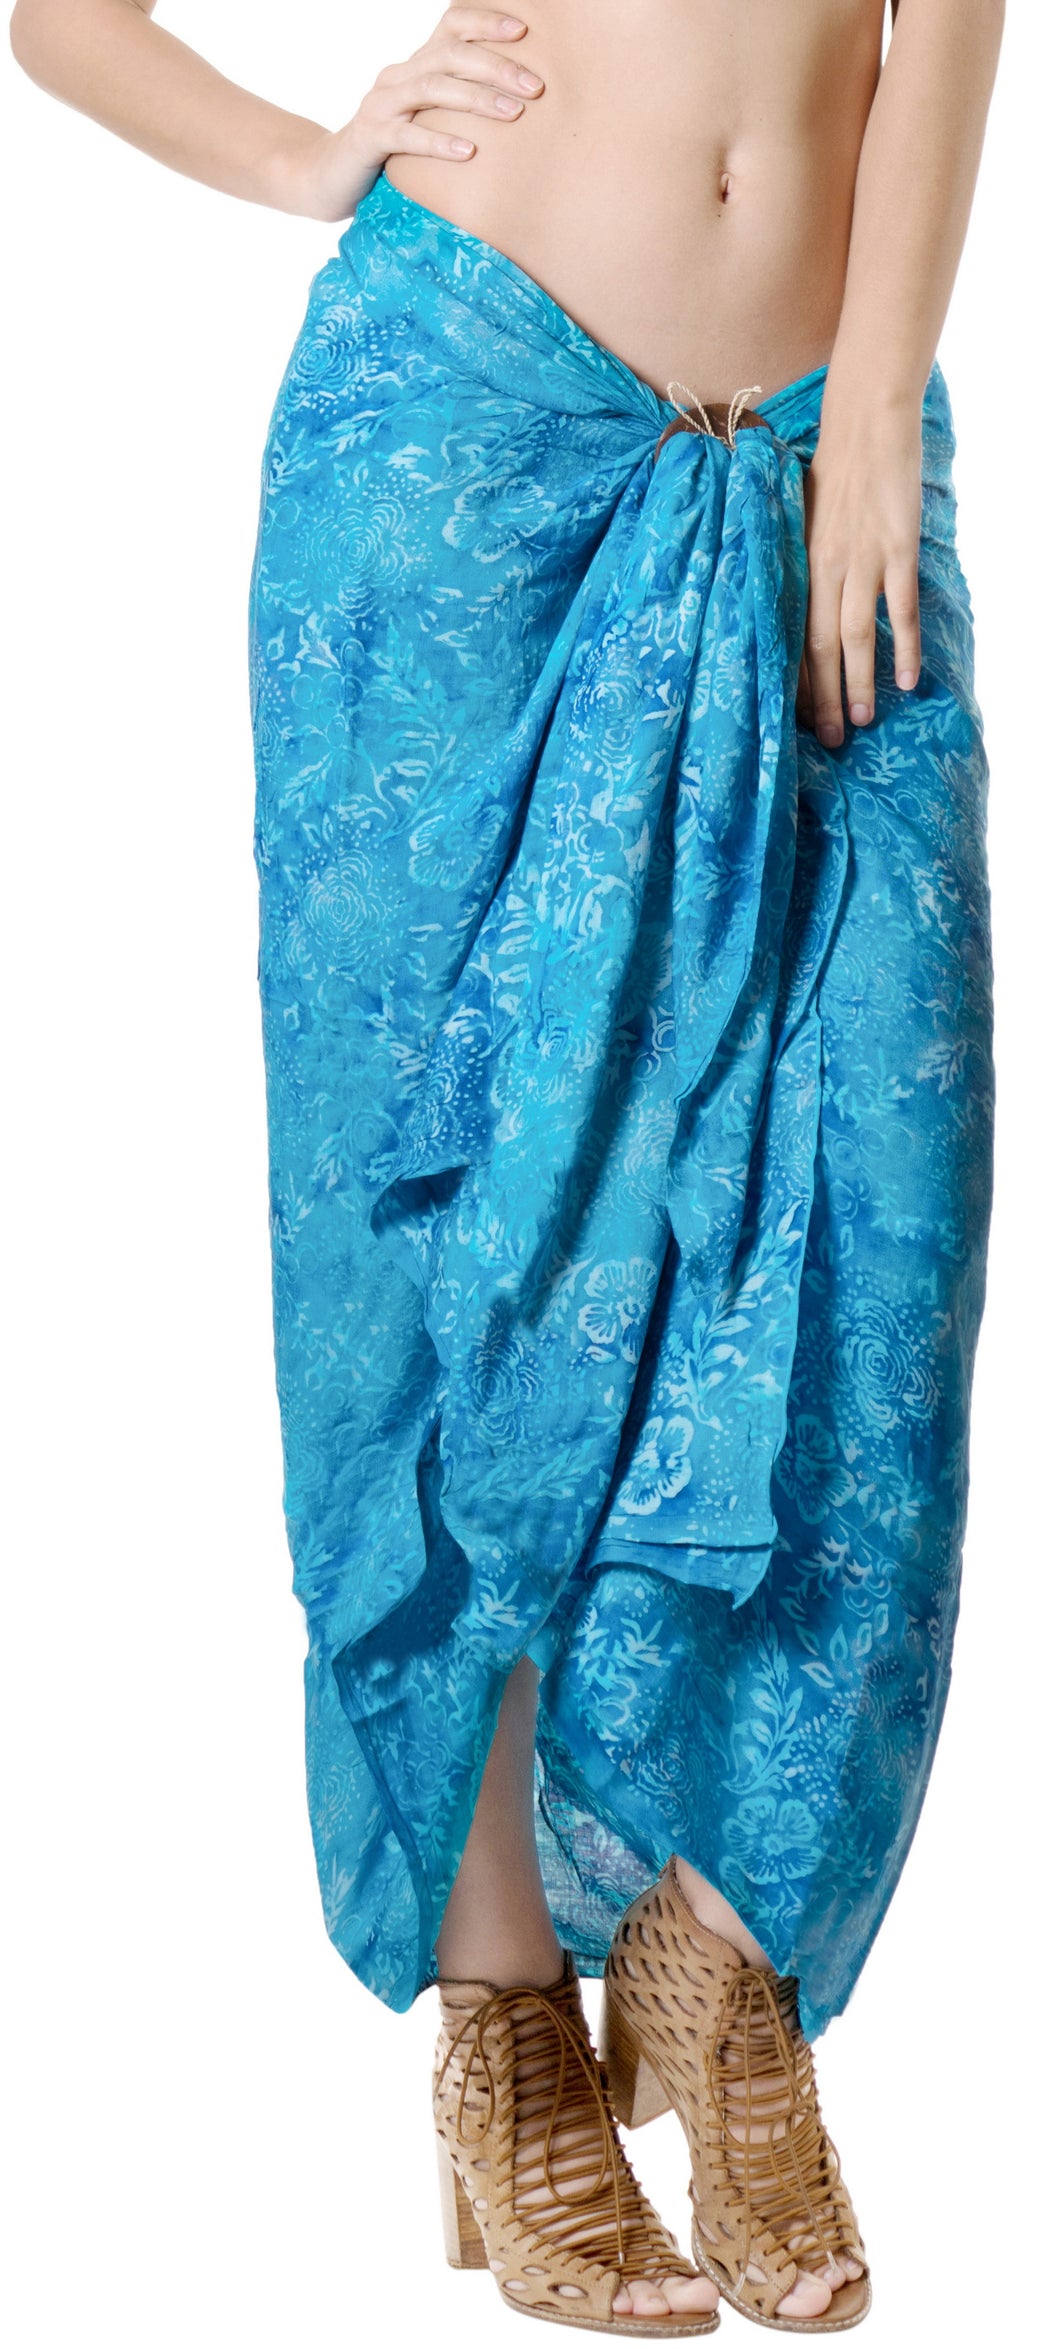 la-leela-women-swimsuit-cover-up-sarong-printed-78x43-royal-blue_4416